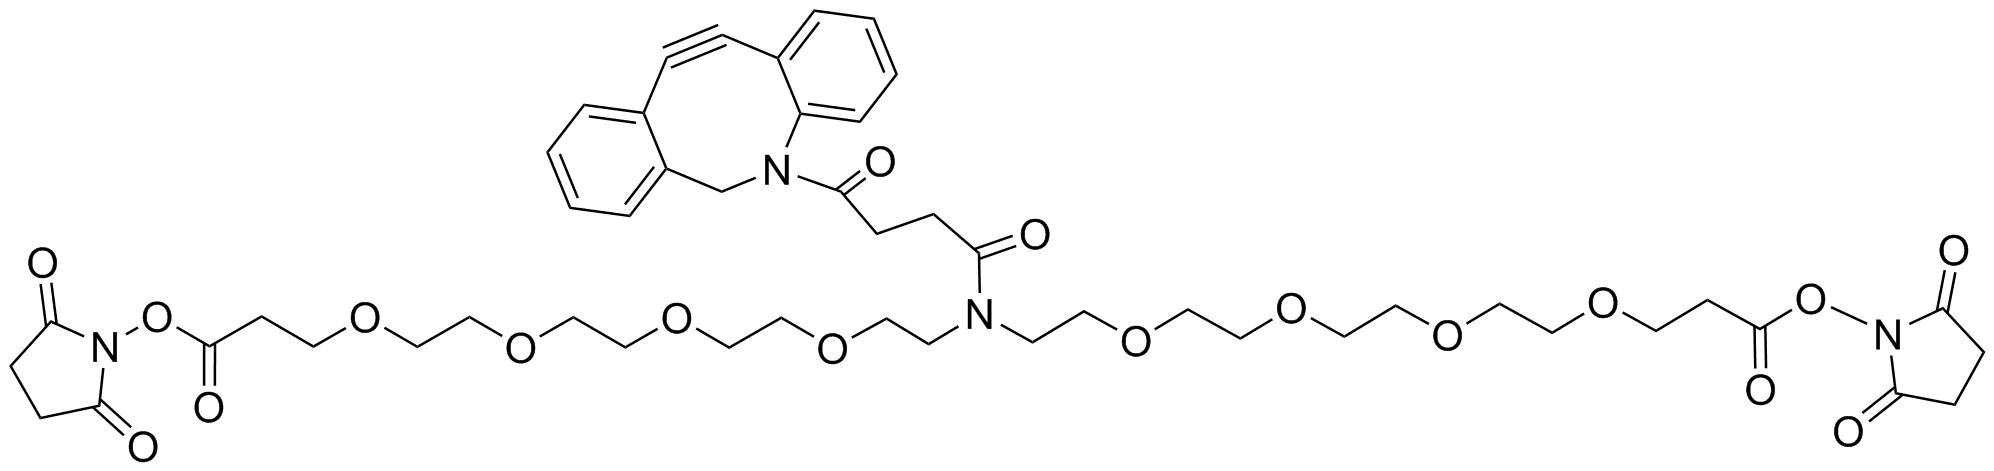 DBCO-N-bis(PEG4-NHS ester)